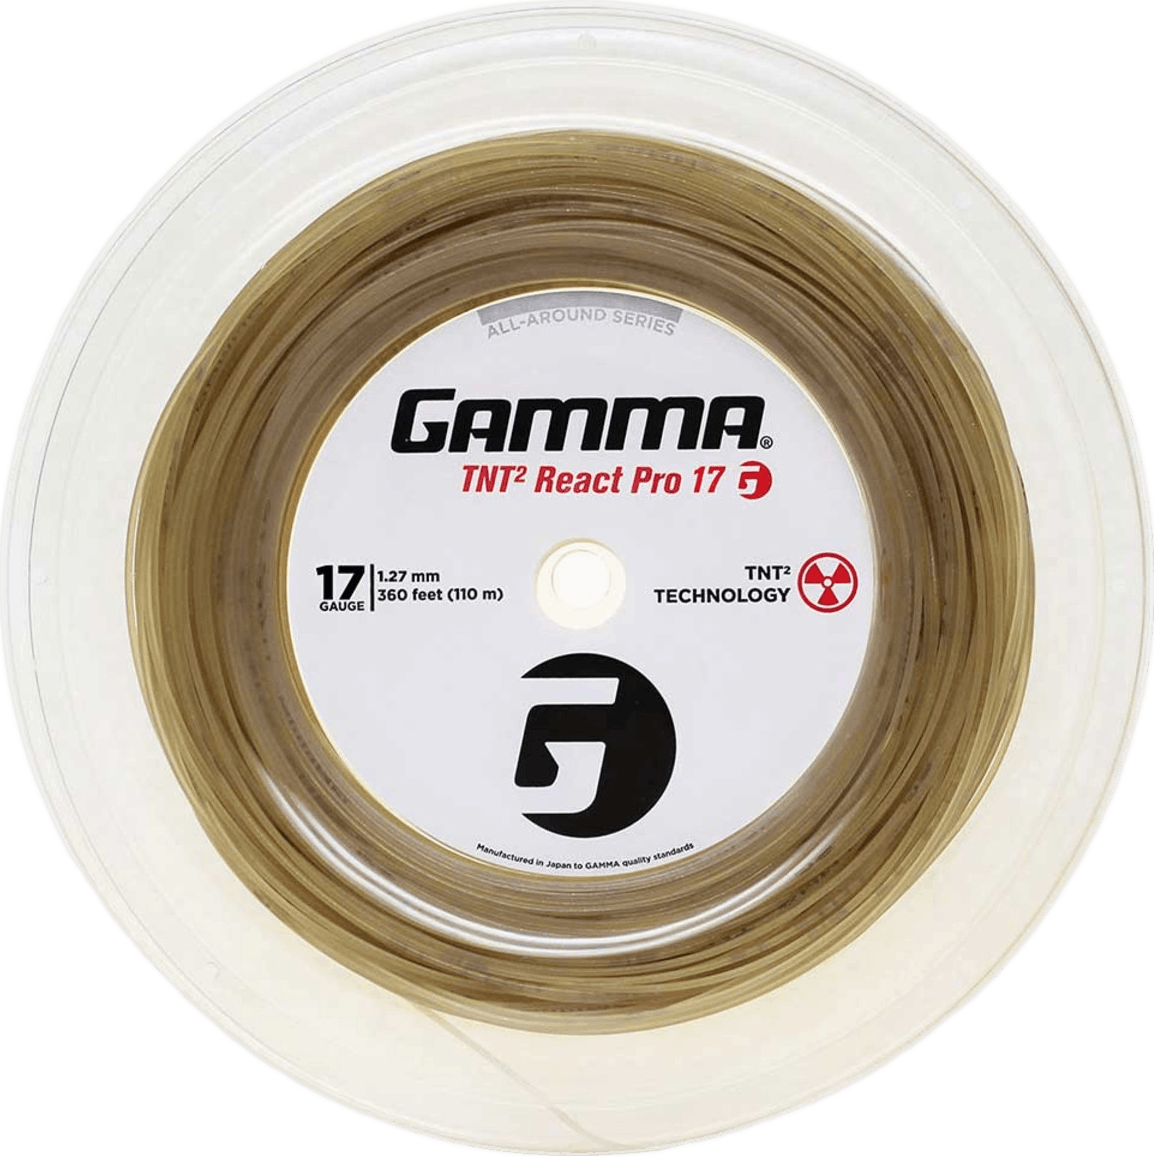 Gamma TNT 2 React Pro String Reel · 17g · Natural